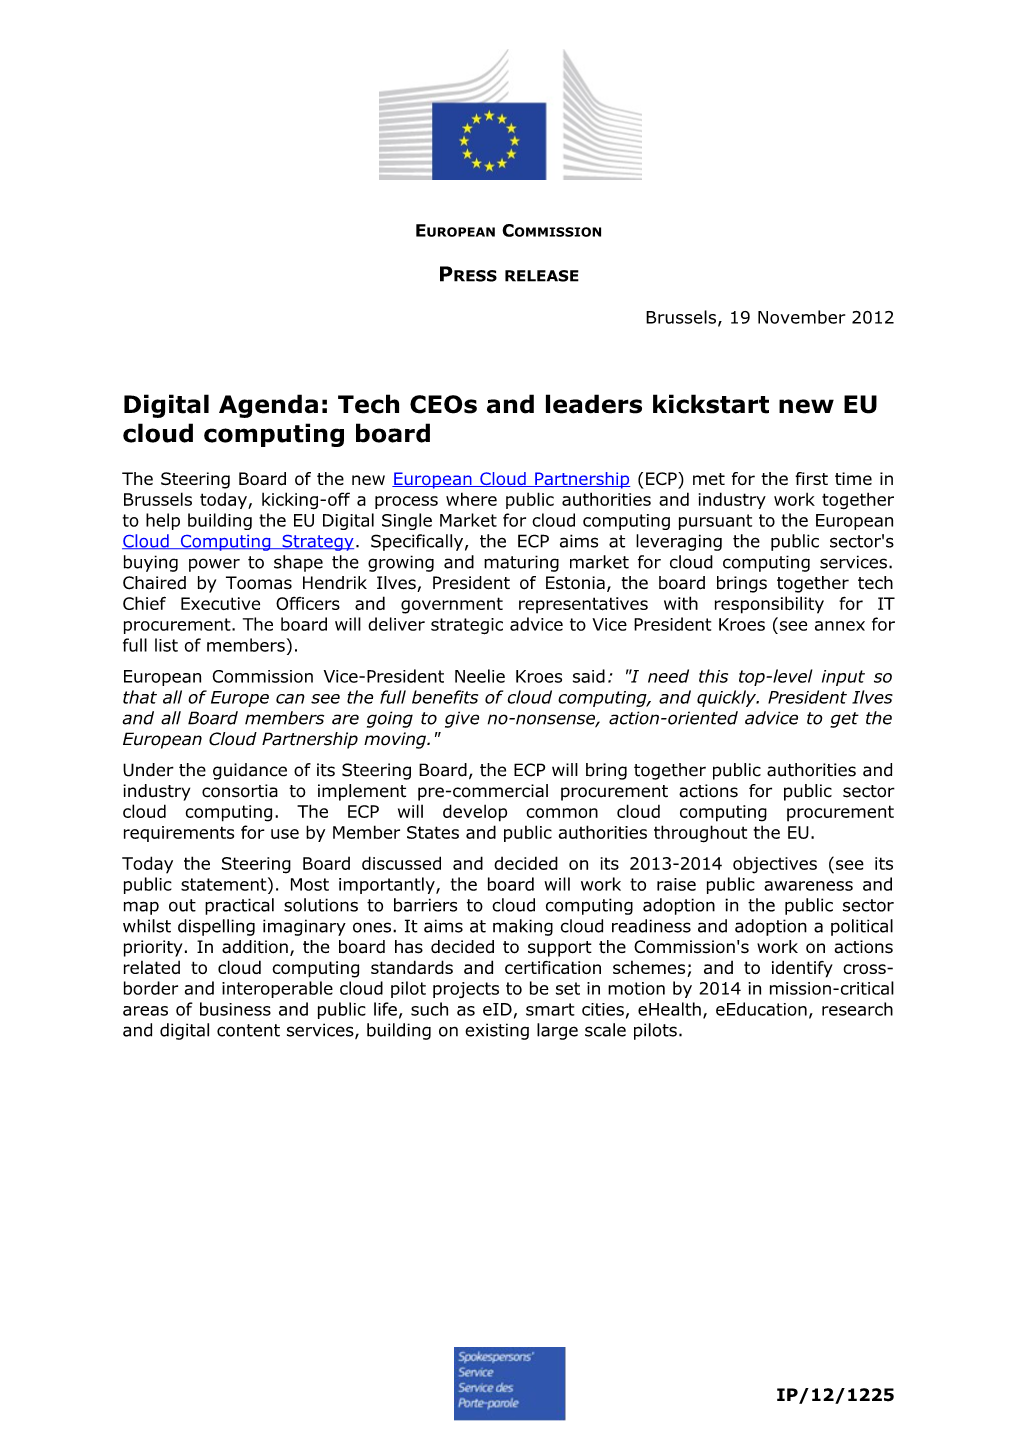 Digital Agenda: Tech Ceos and Leaders Kickstart New EU Cloud Computing Board